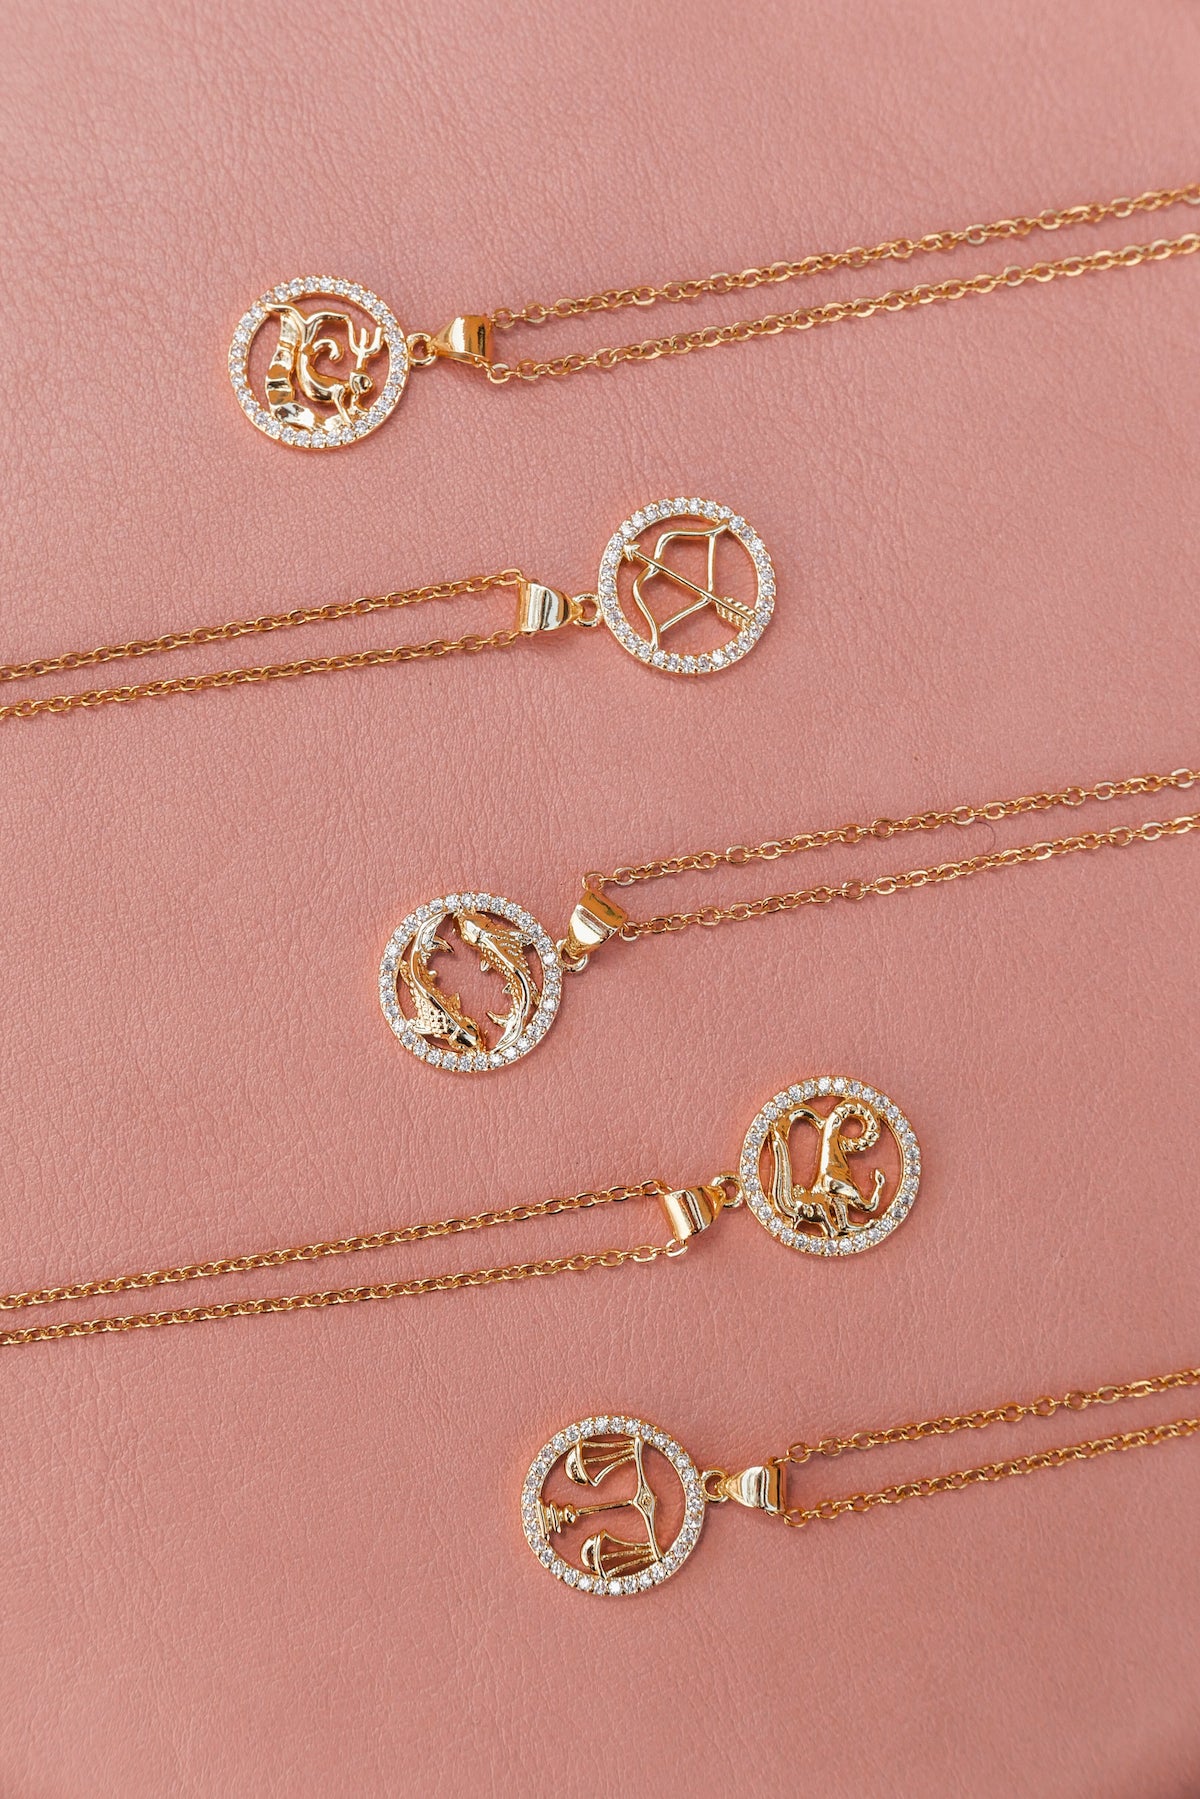 6 styles of zodiac necklace laying flat on pick backdrop